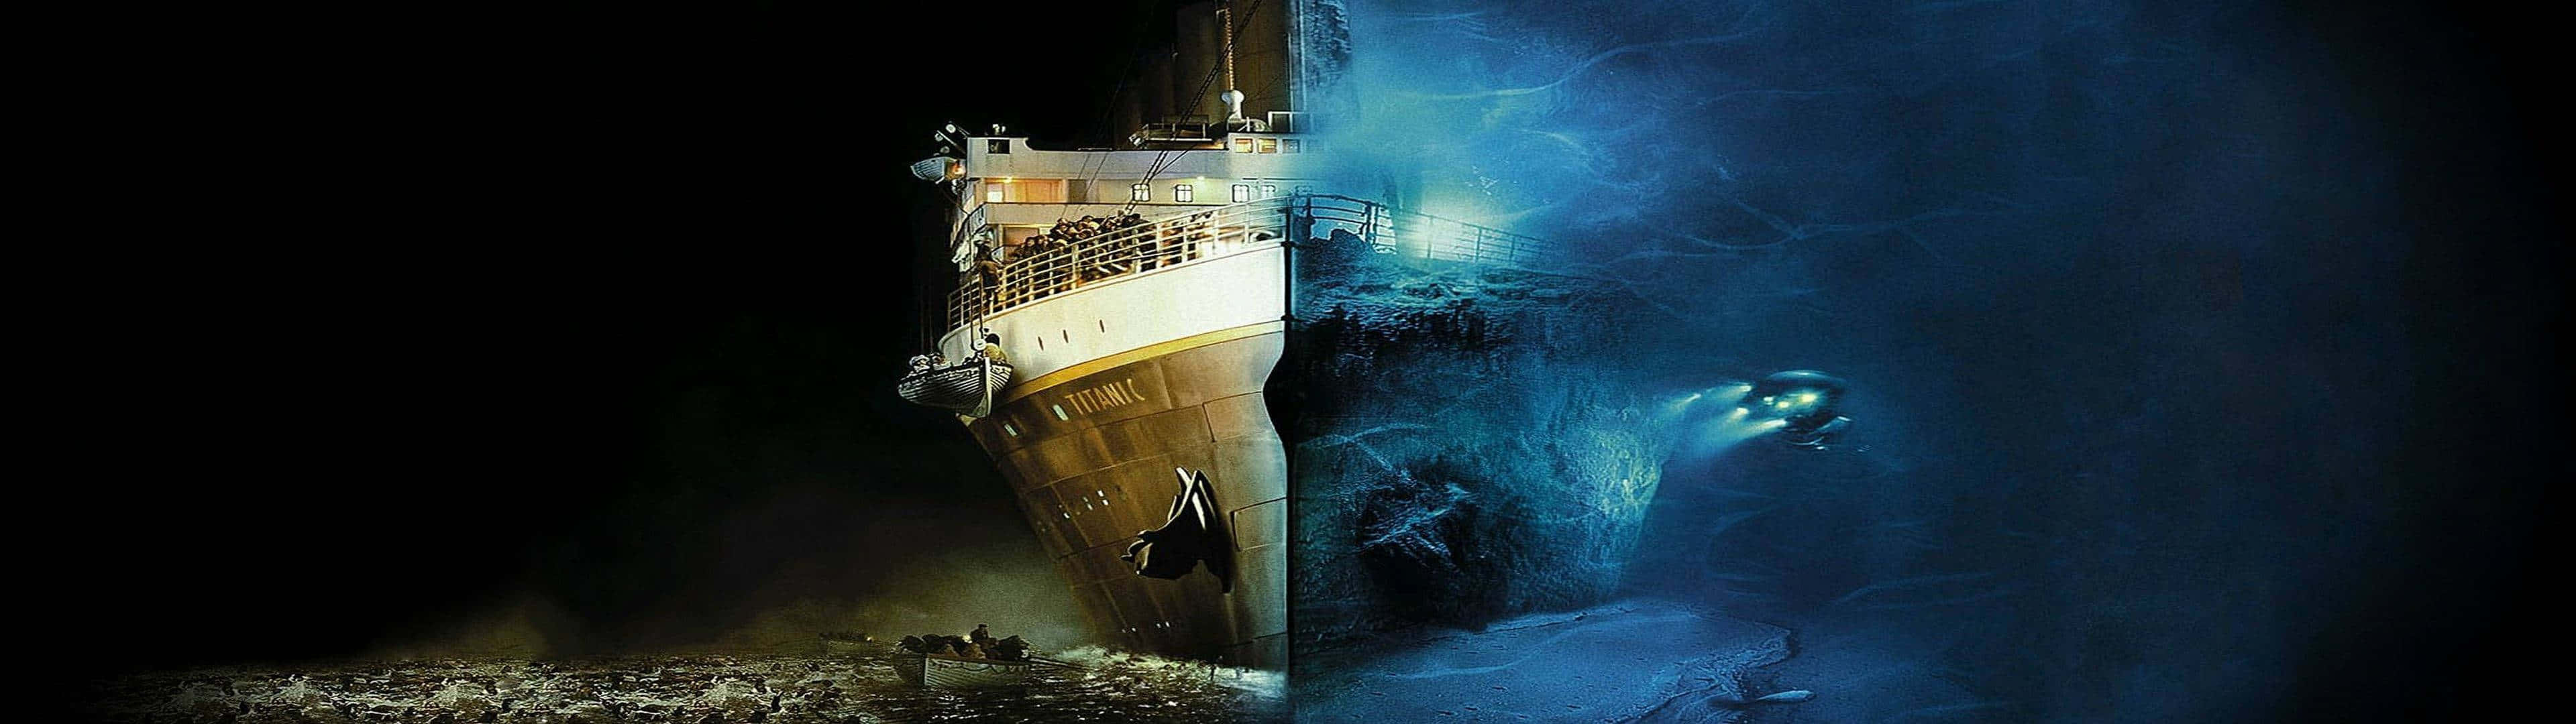 Titanicultra Hd Dual Monitor - Bakgrundsbild. Wallpaper